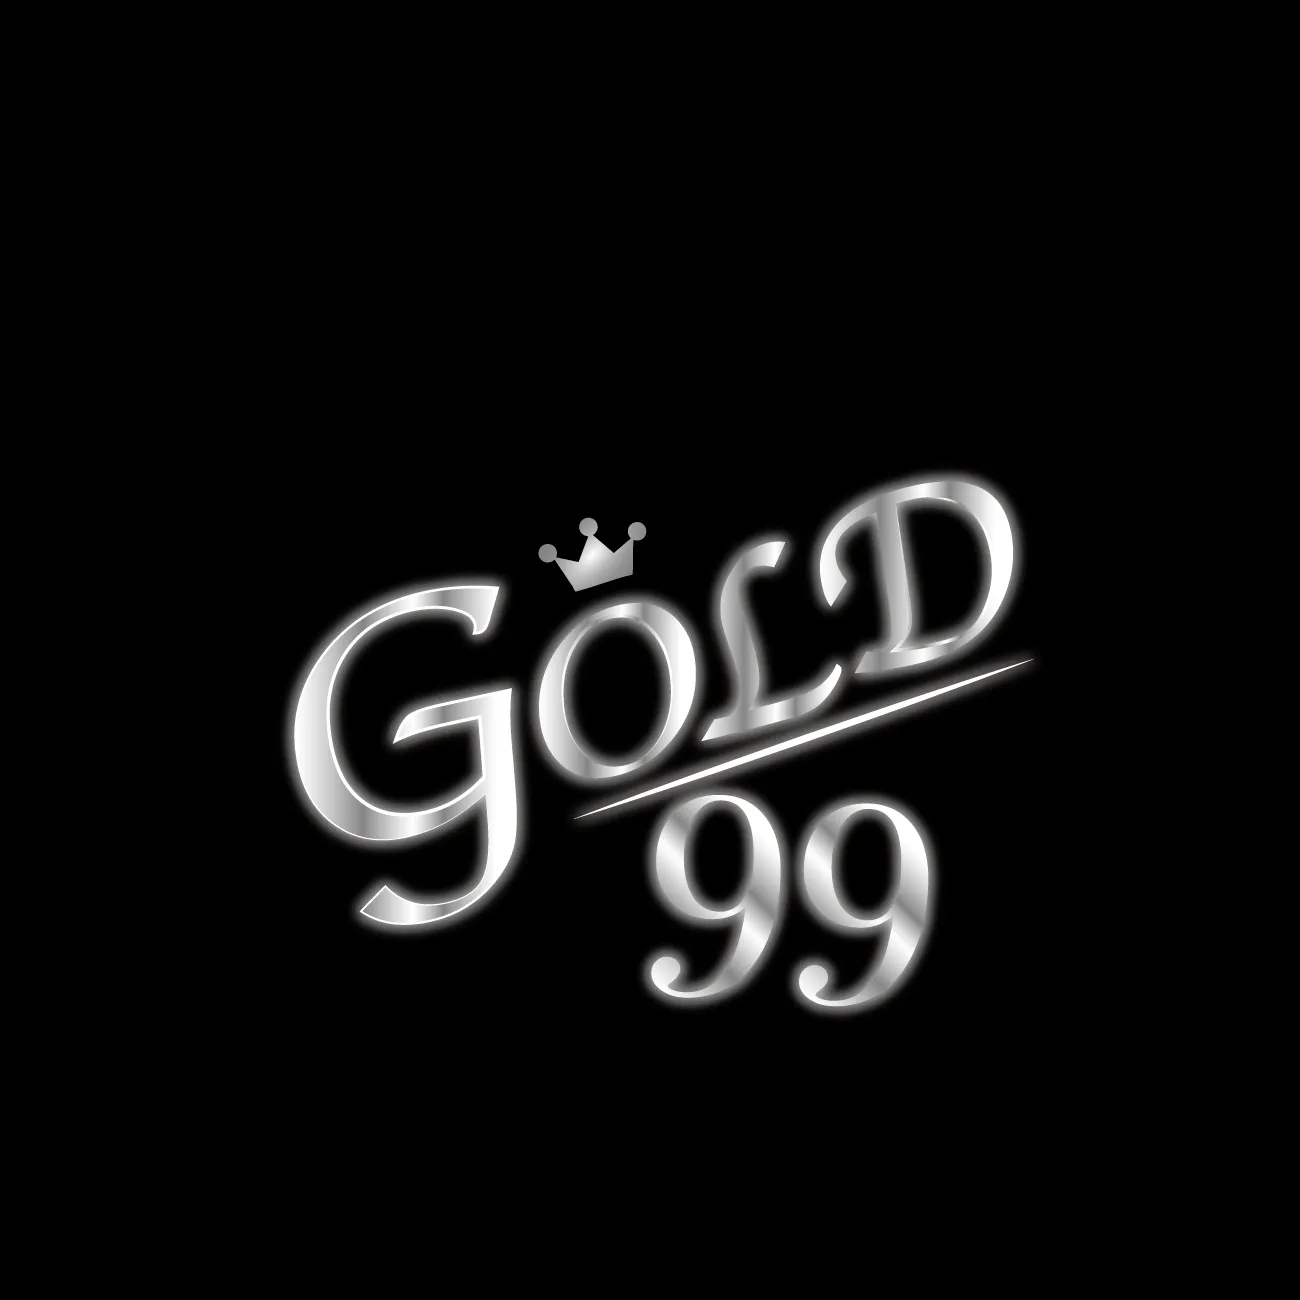 gold999 register